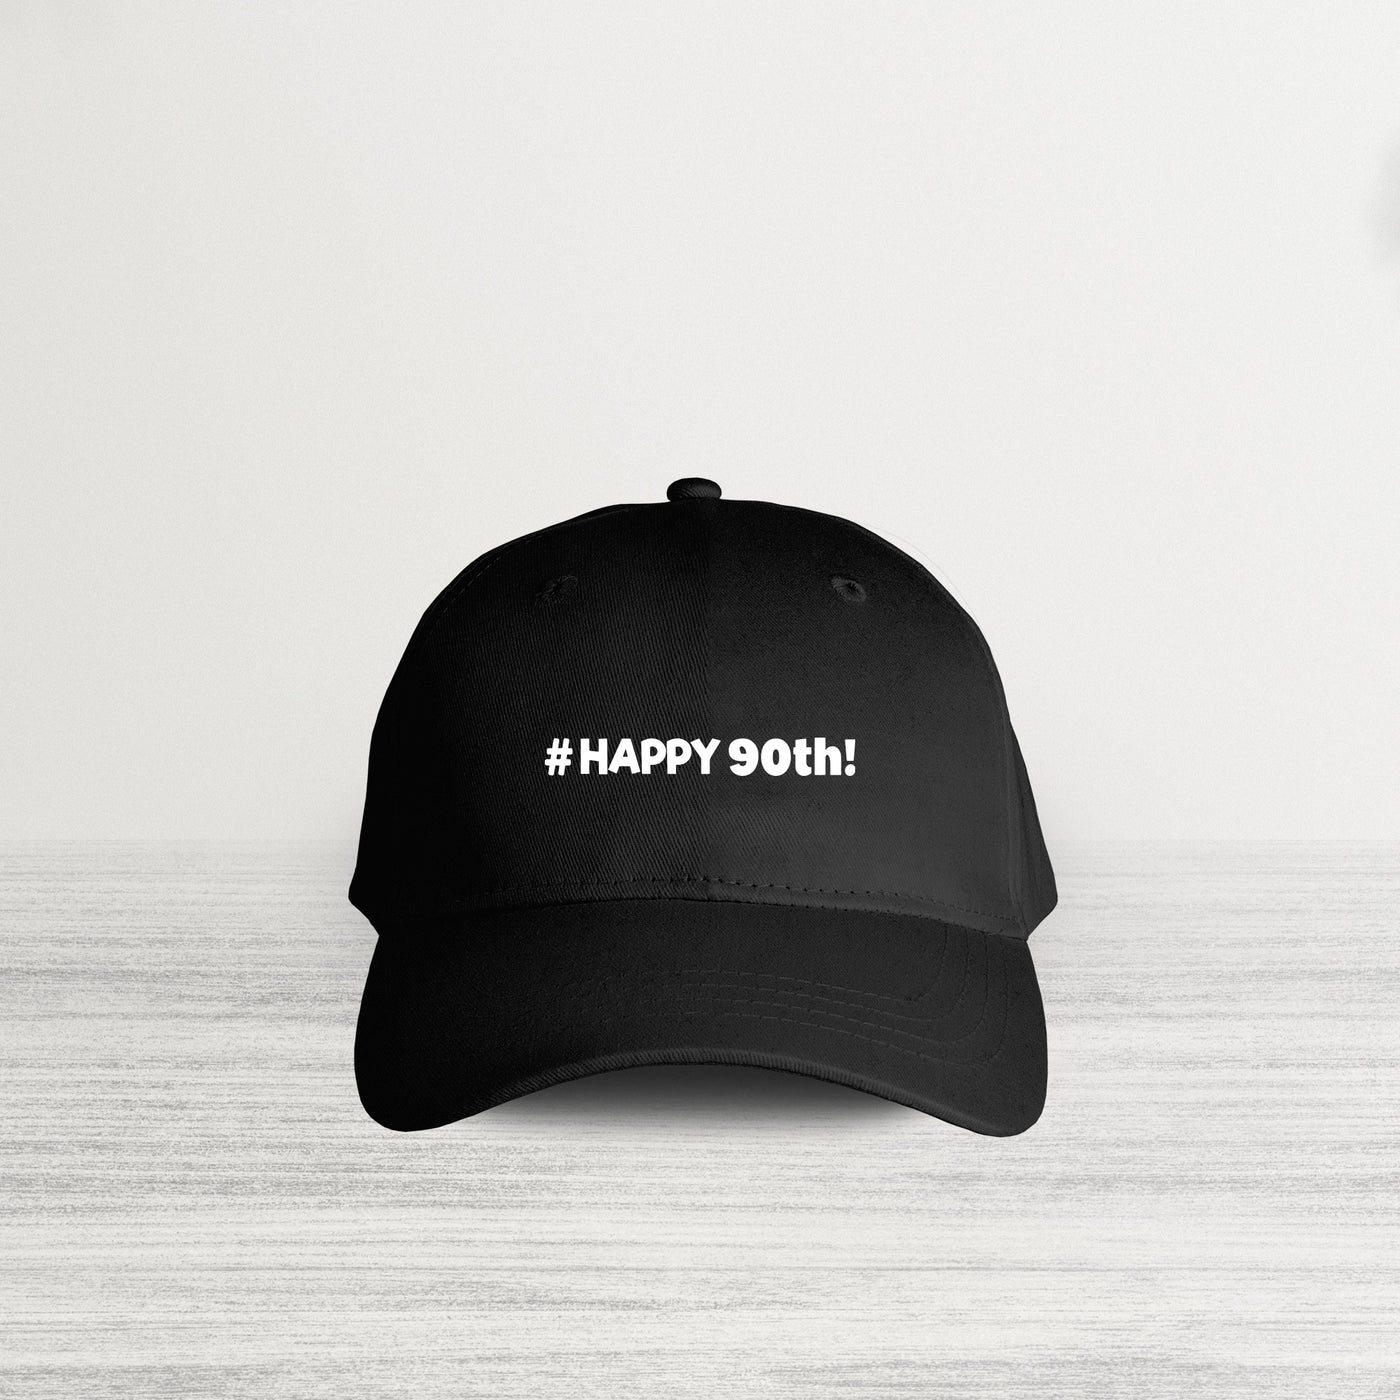 #HAPPY 90 B&W HAT